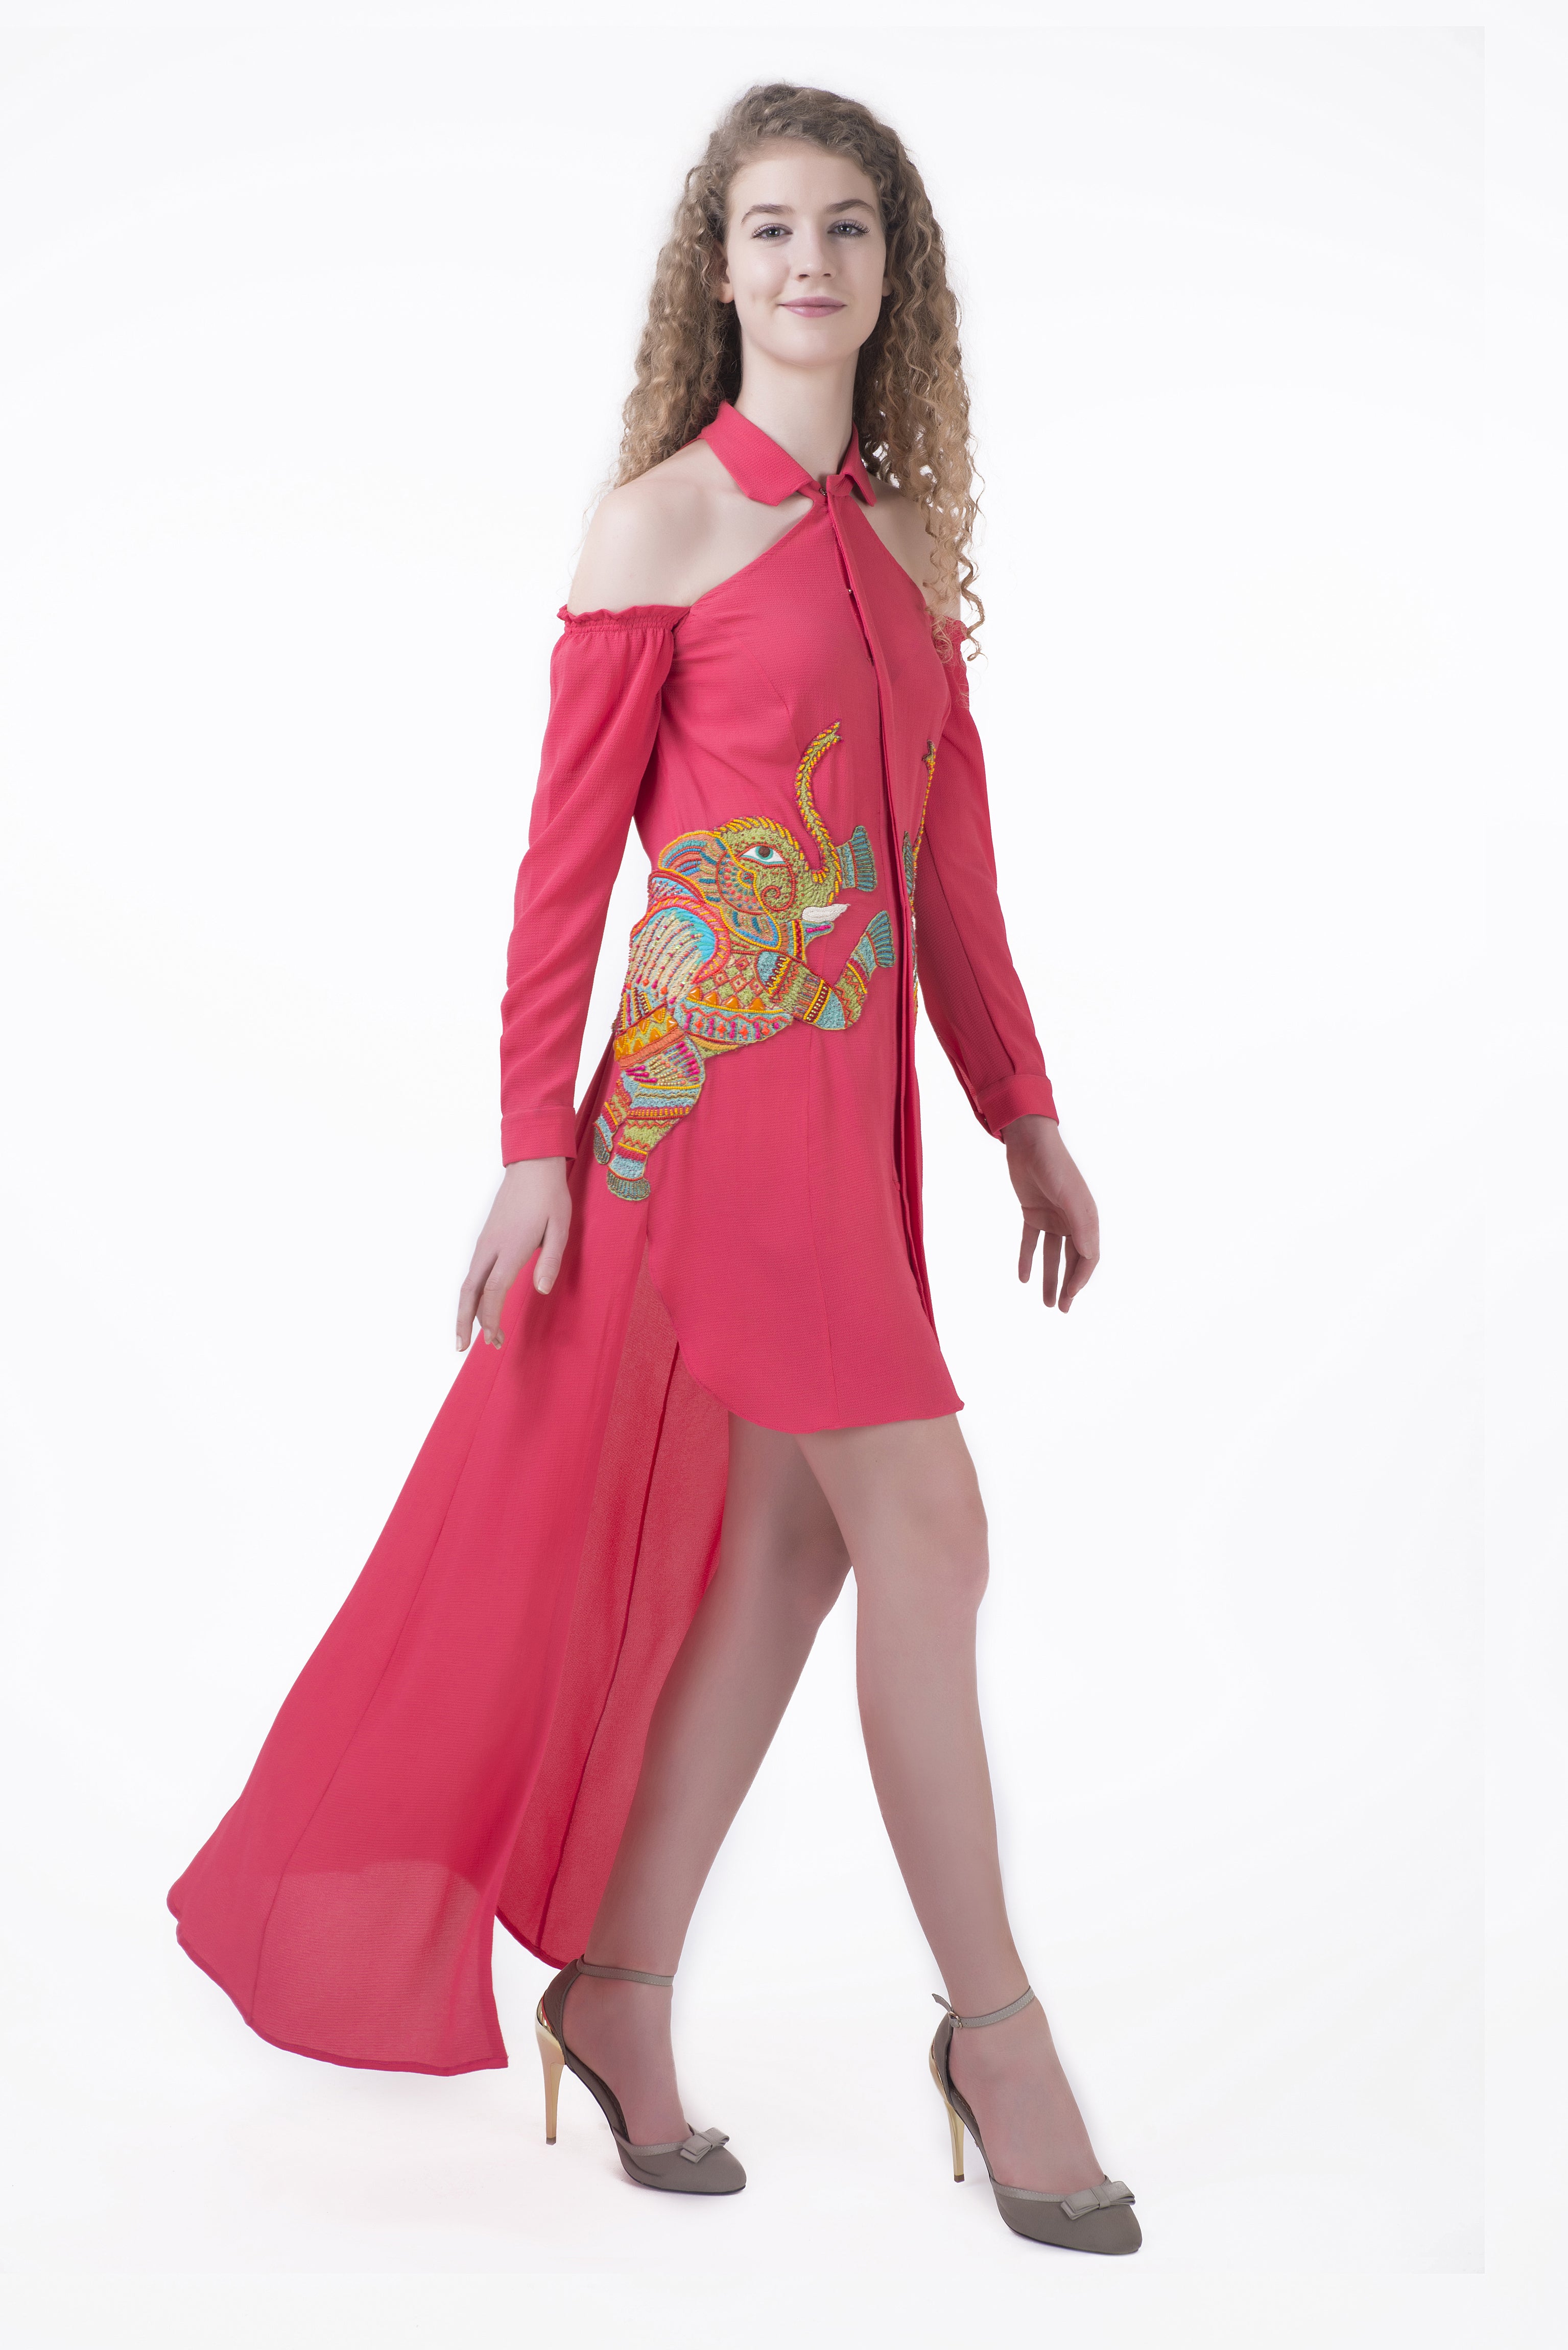 High-Low Shirt Dress with Motifs on sides - Saaj By Ankita